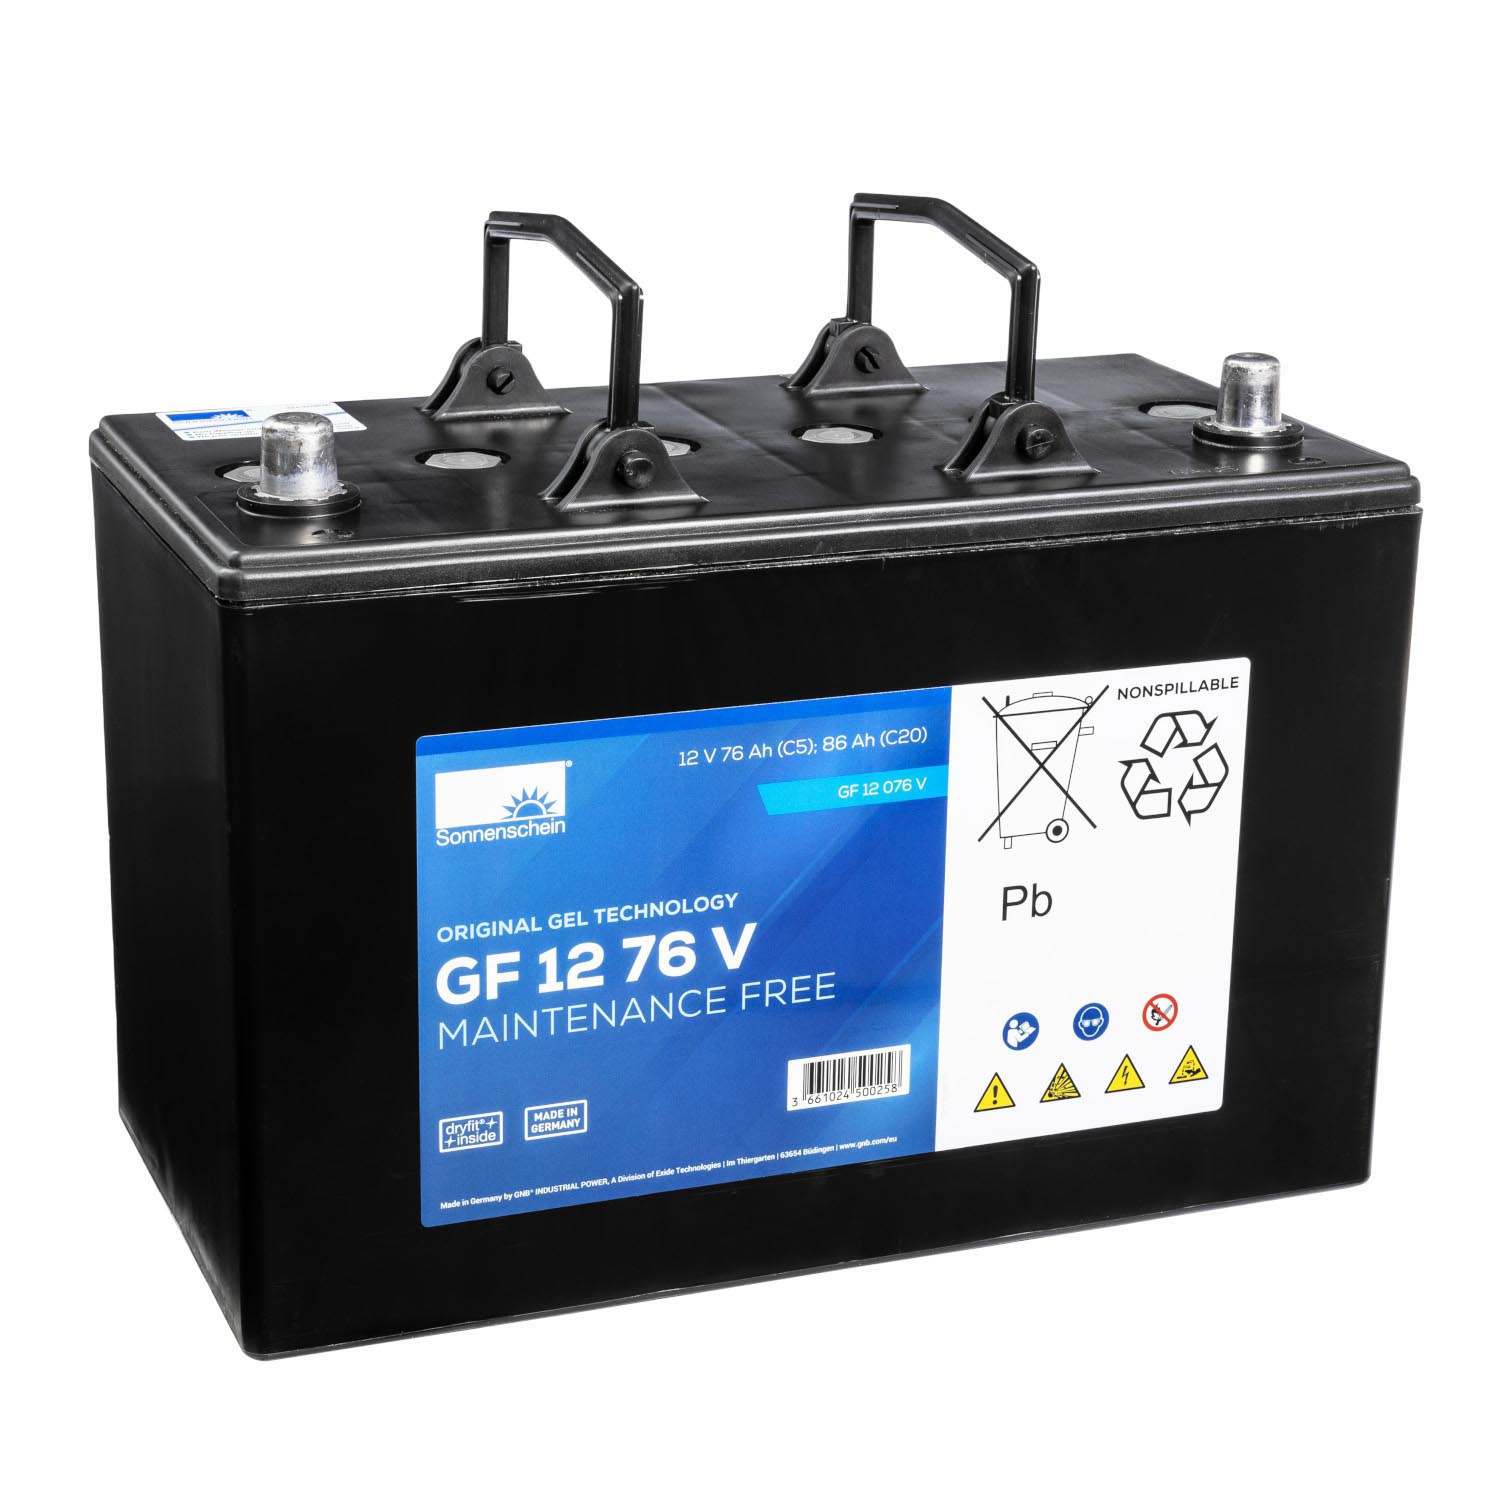 SONNENSCHEIN 12V 76Ah Gel Batterie GF-V GF 12 076 V